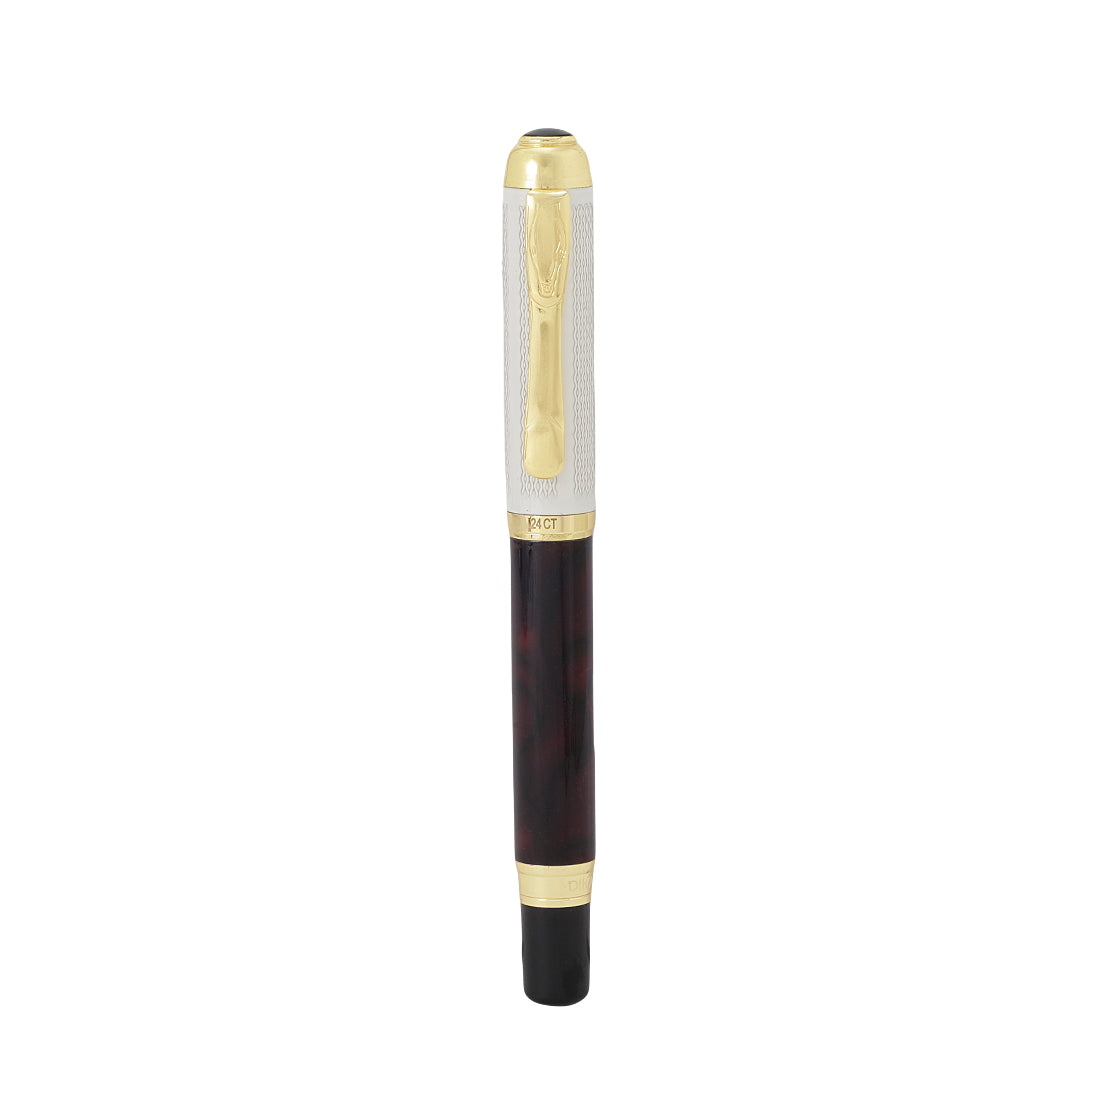 Hayman Dikawen 24 CT Gold Plated Pen with Box (P-49) - Hayman Pen 